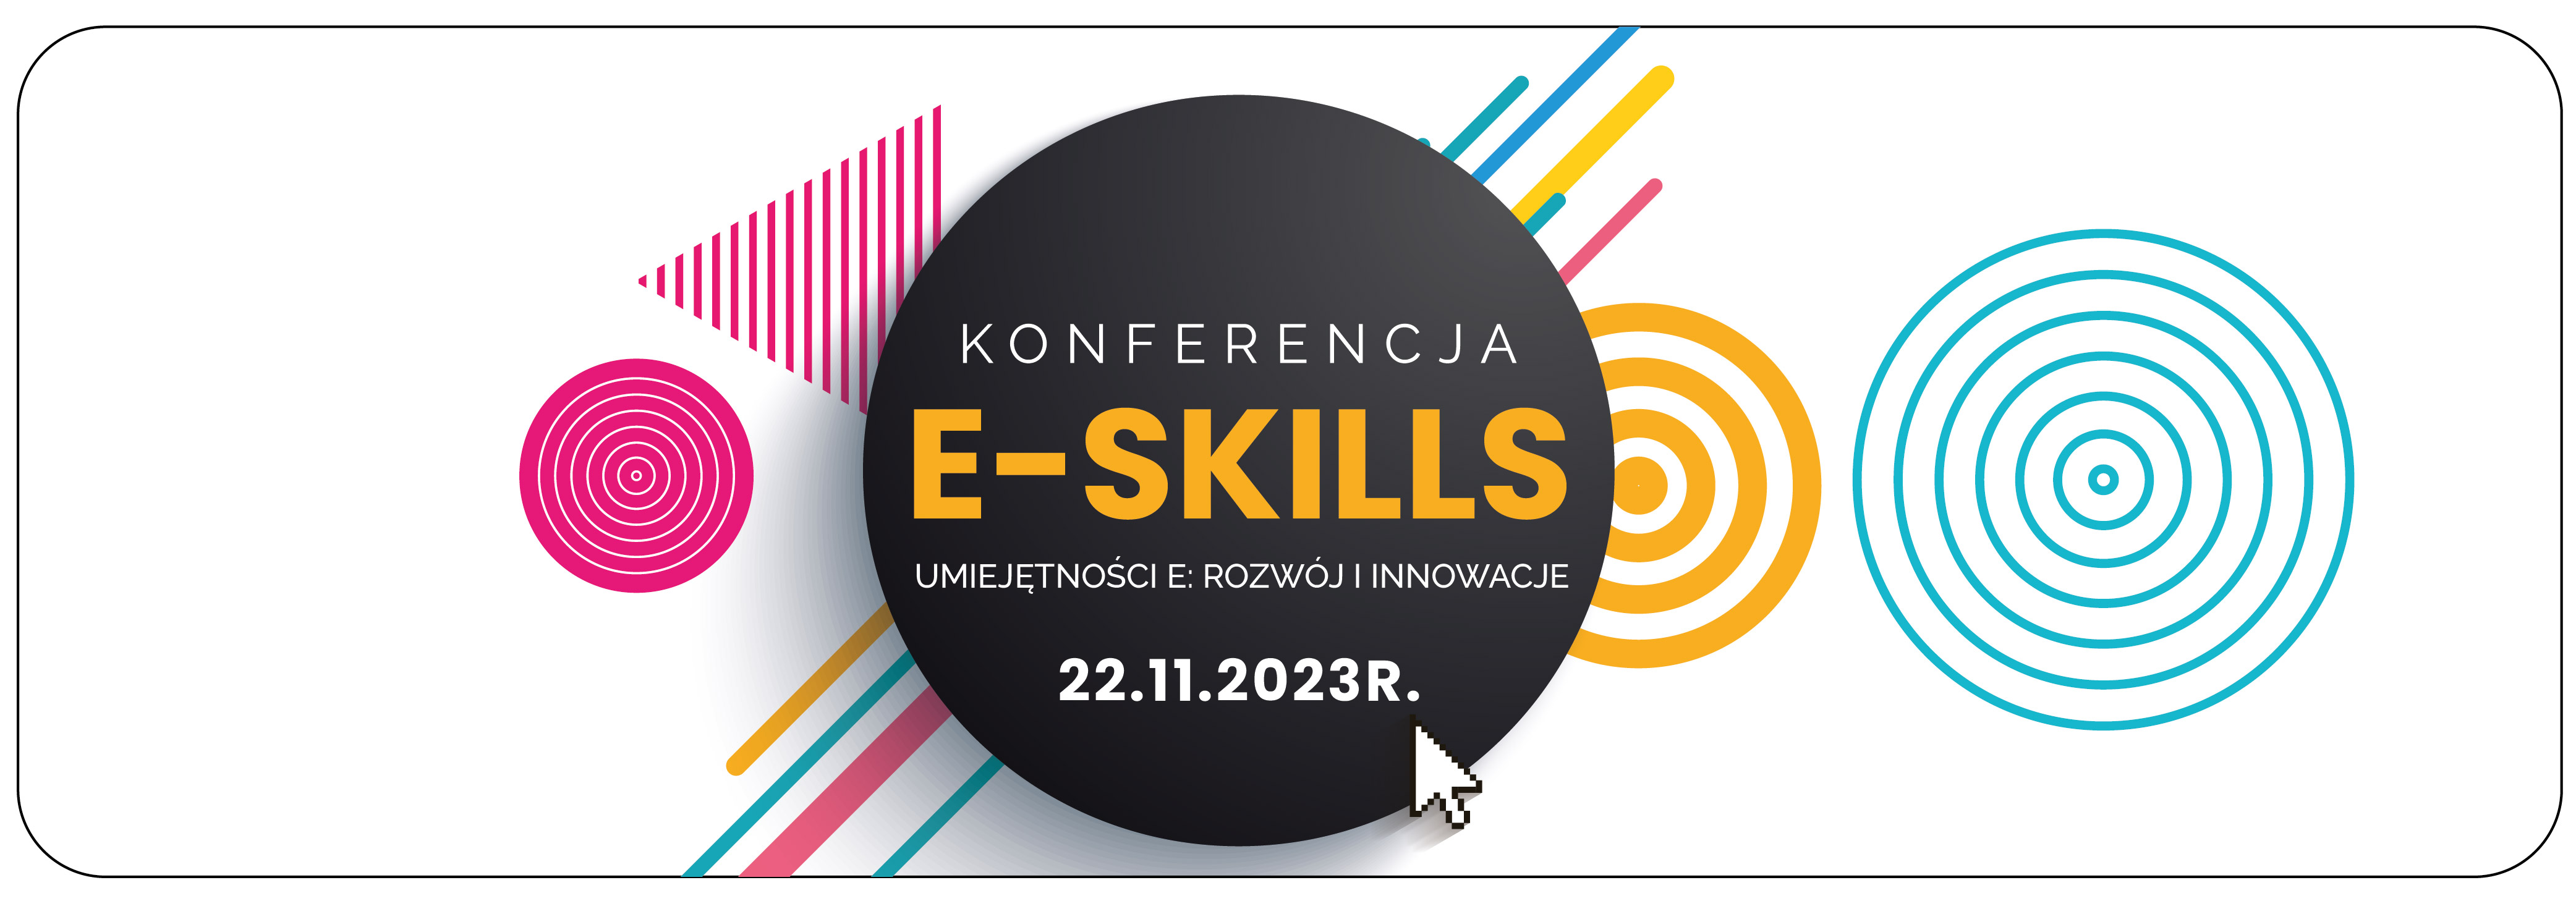 Konferencja E-Skills